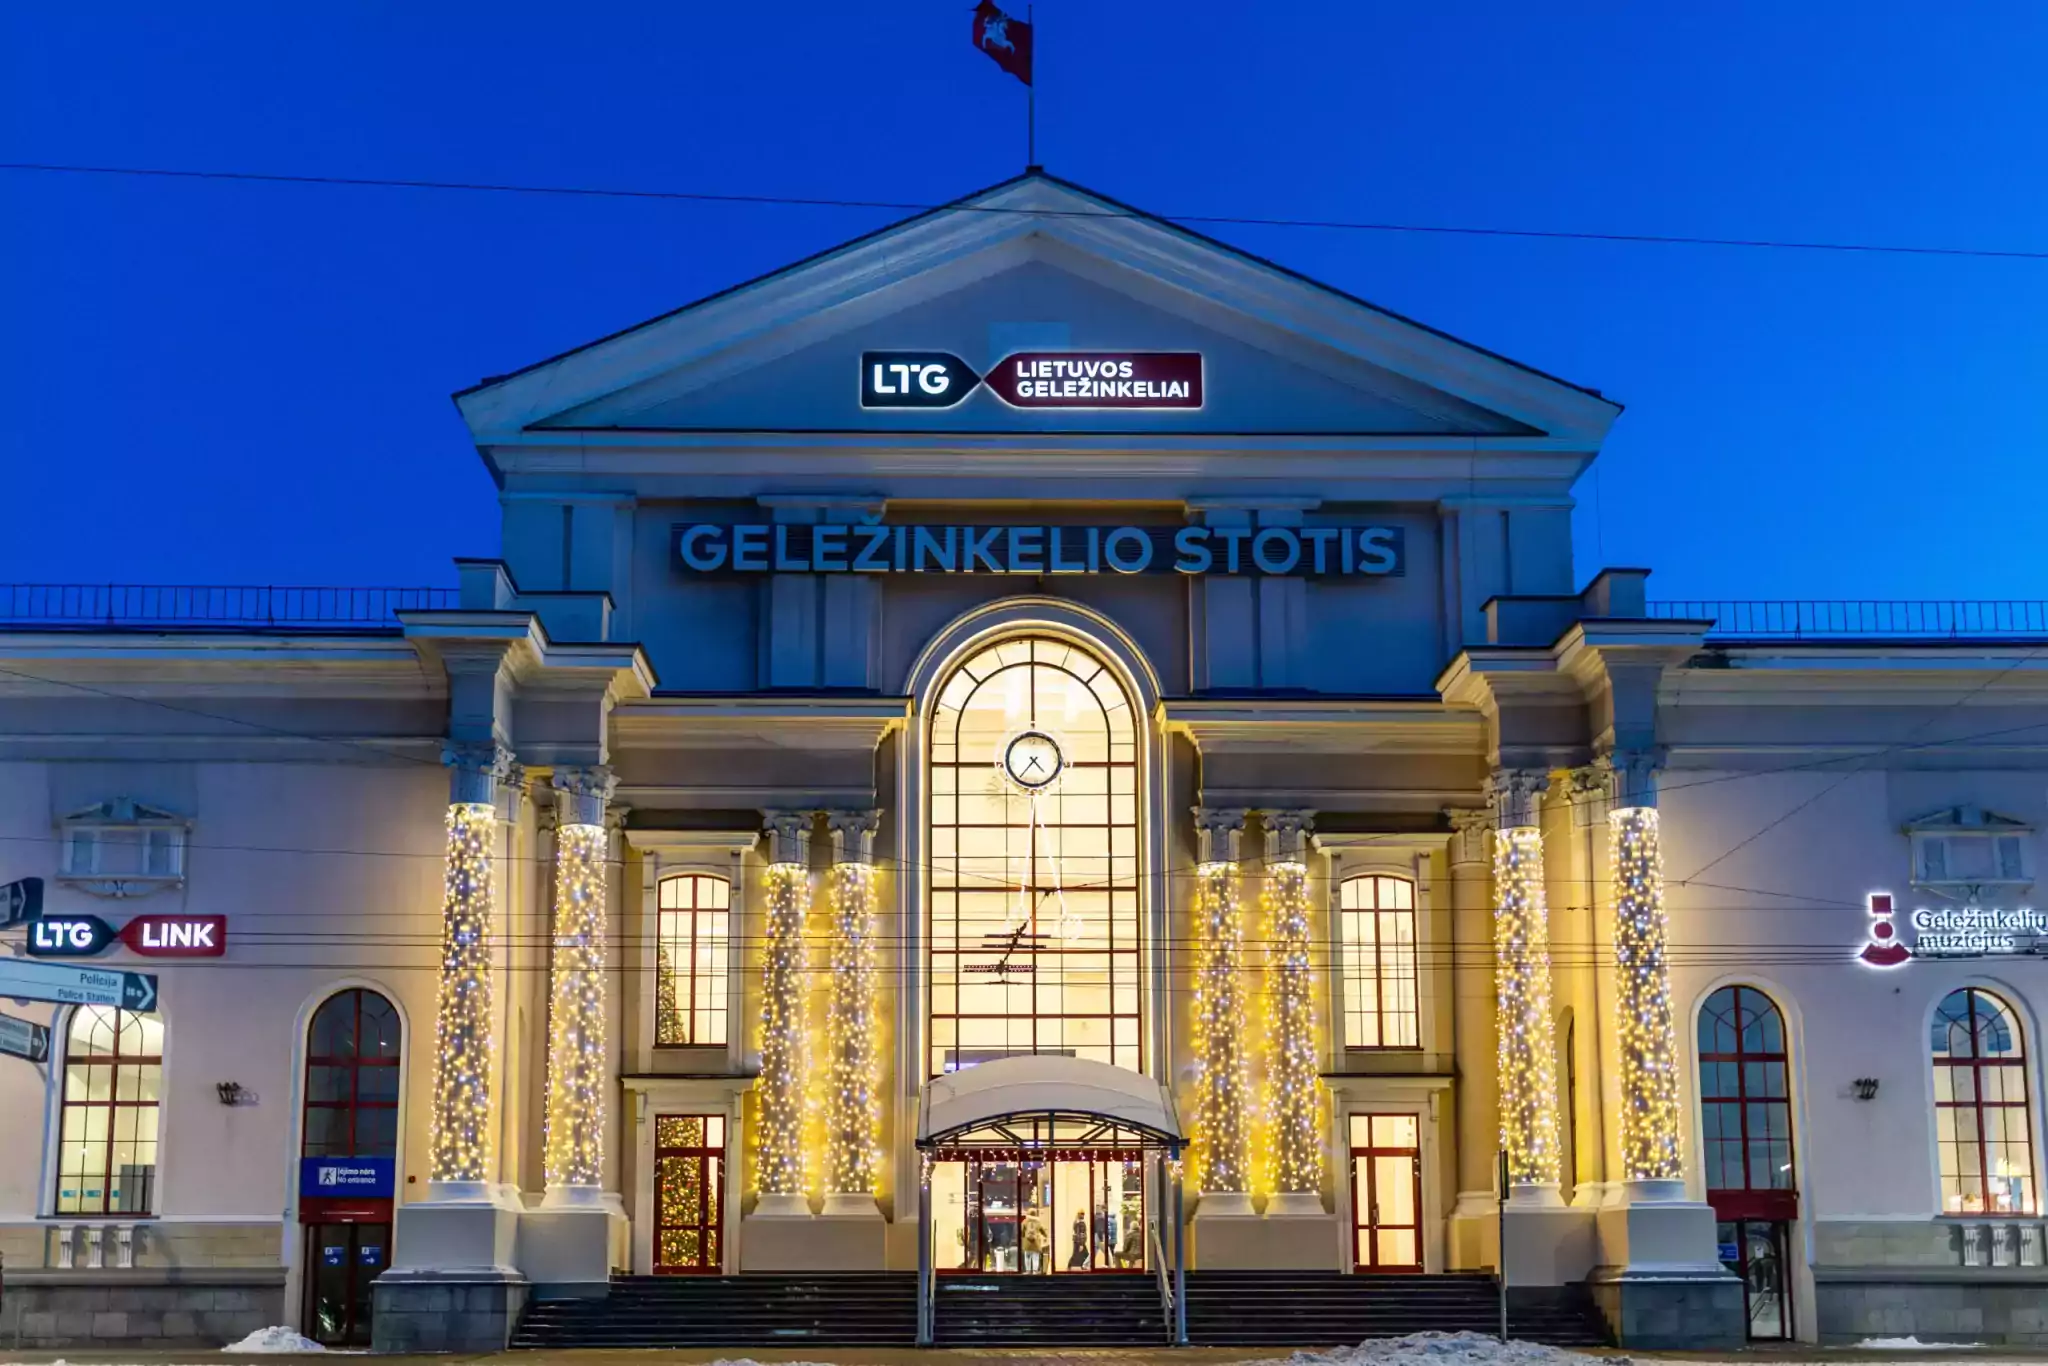 The Vilnius railway station